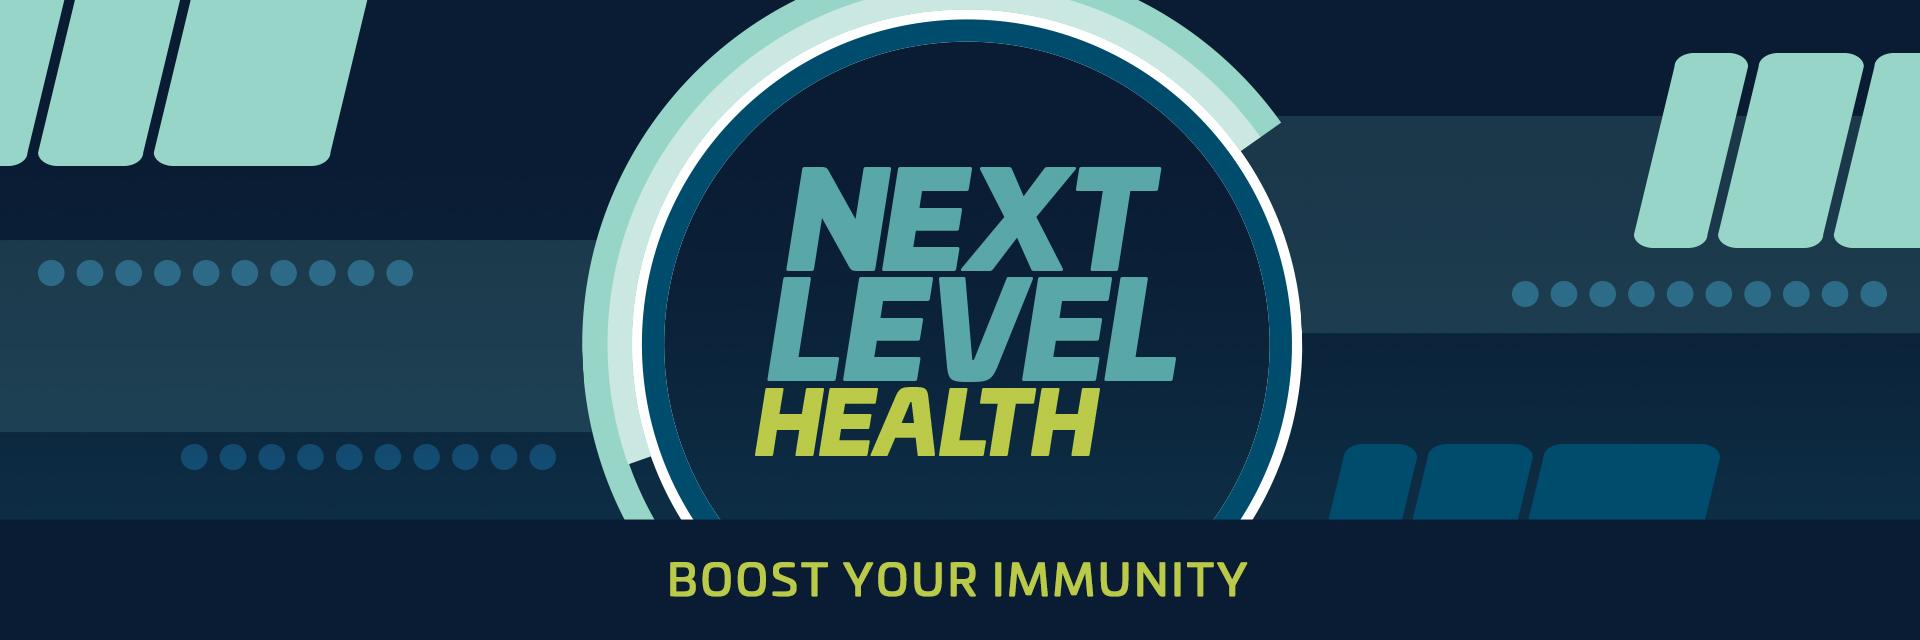 Next Level Health image